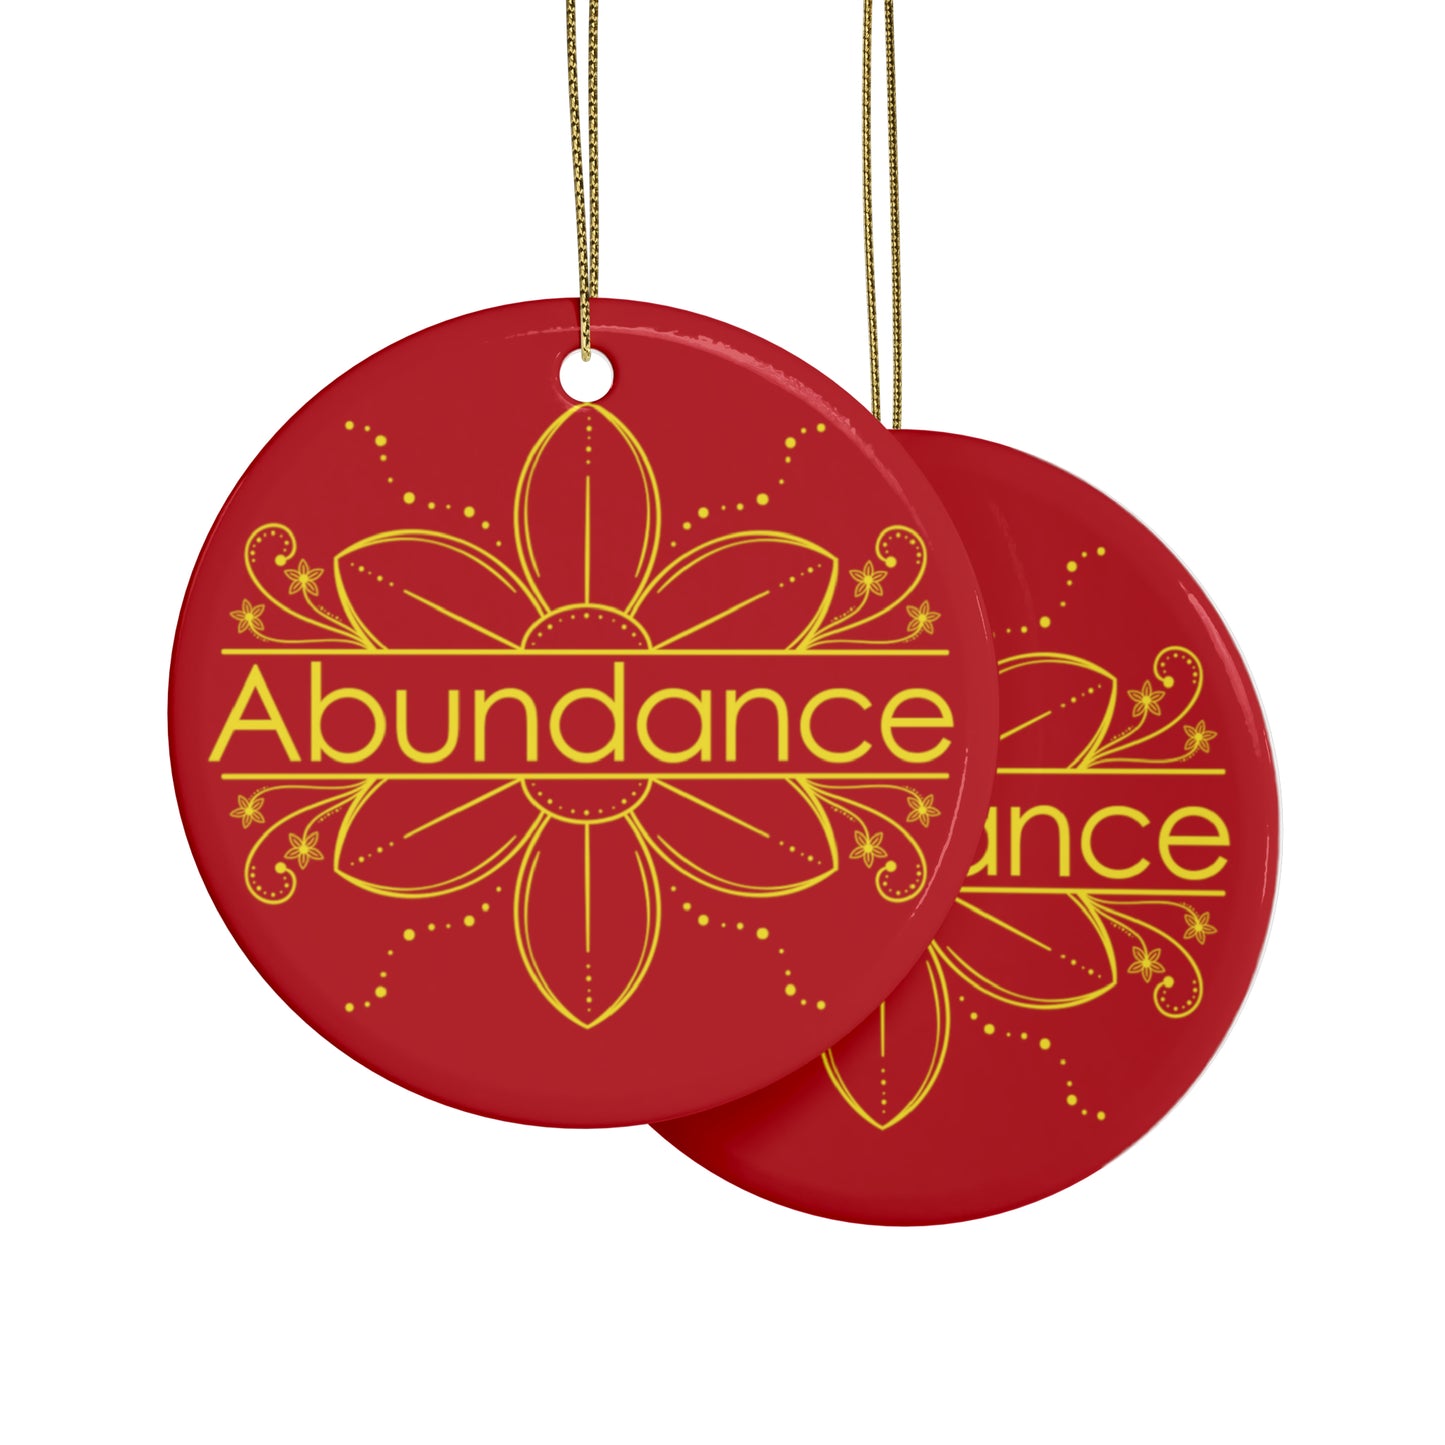 "Abundance" Ceramic Ornament (Red)